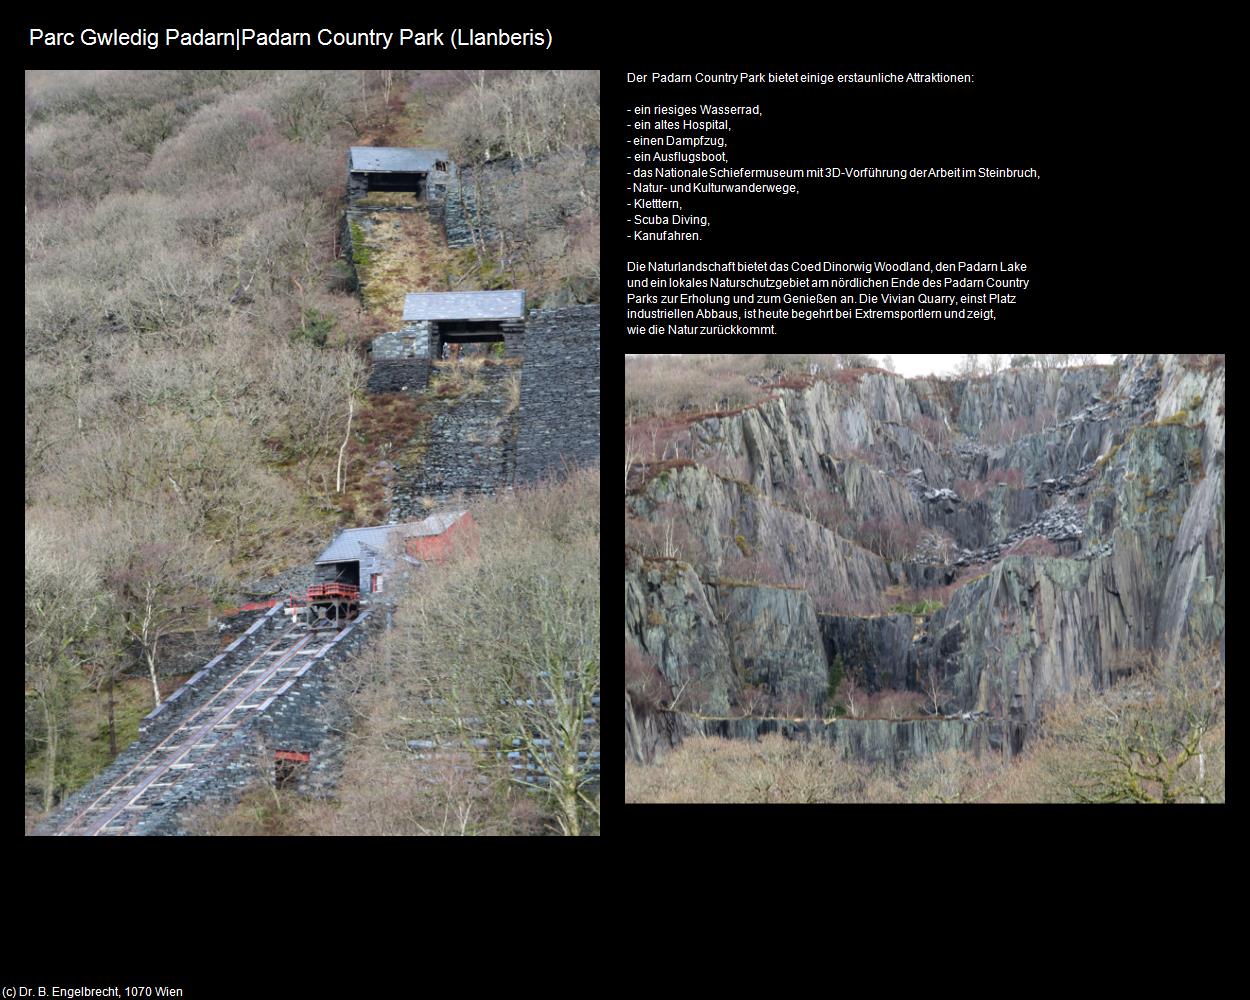 Parc Gwledig Padarn|Padarn Country Park              (Llanberis, Wales) in Kulturatlas-ENGLAND und WALES